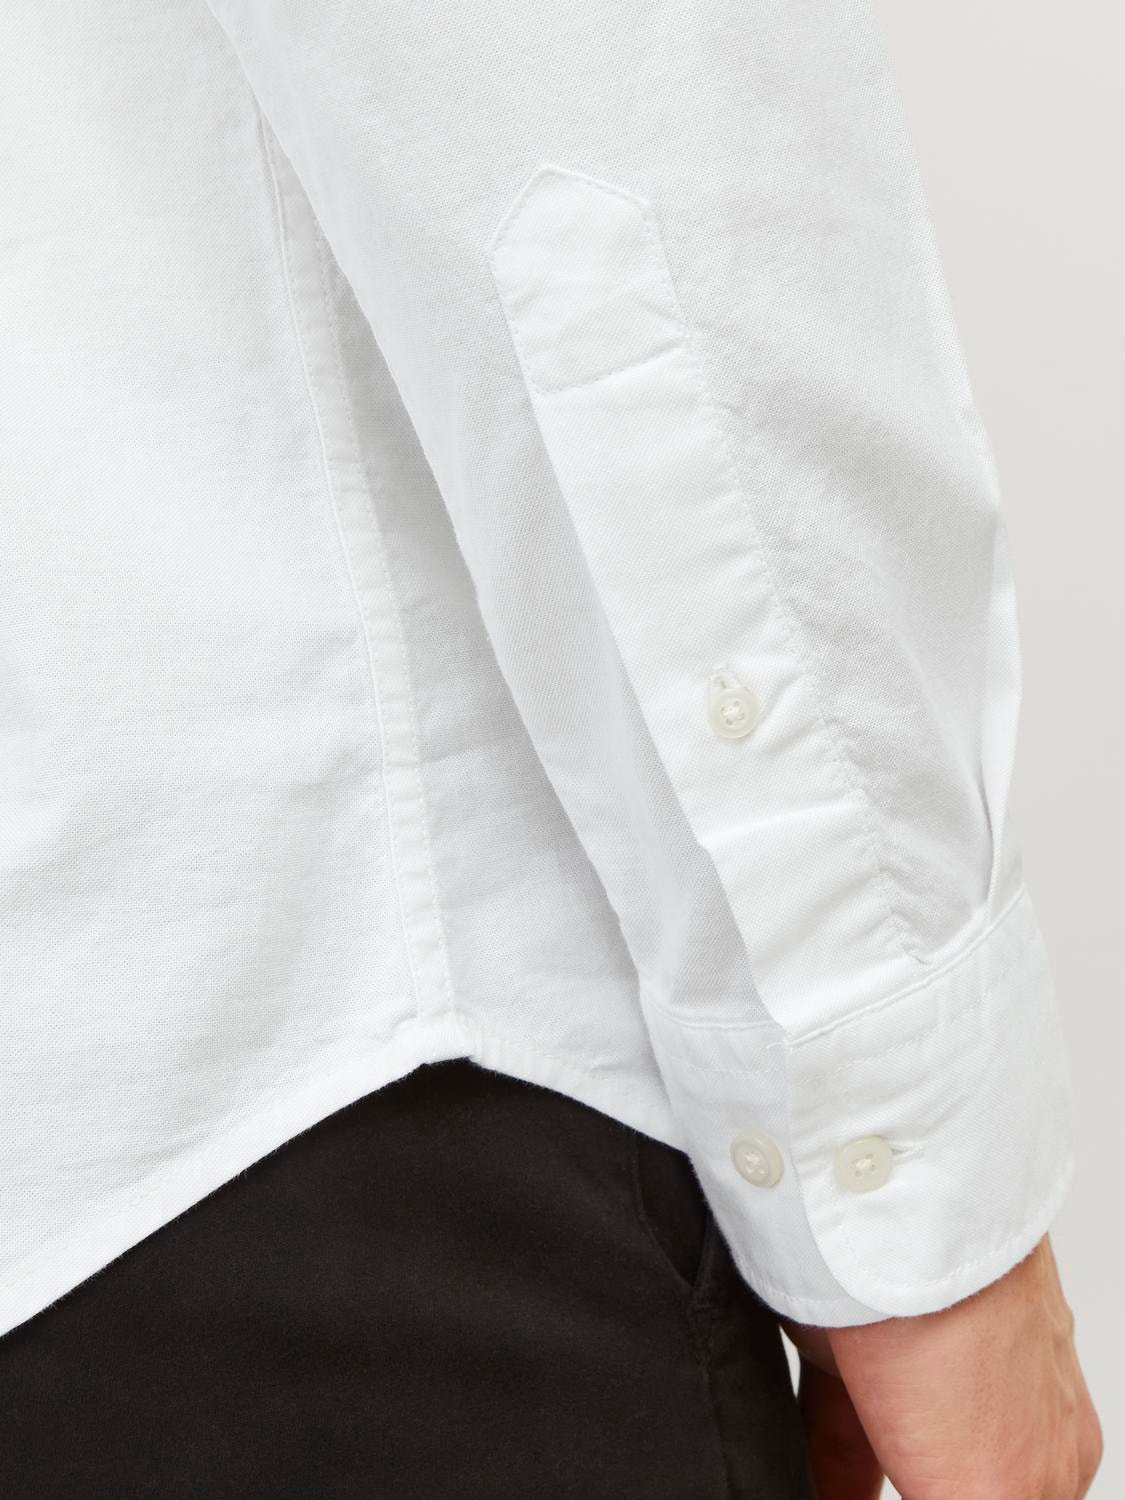 Jack & Jones Slim Fit Formell skjorta -White - 12192150